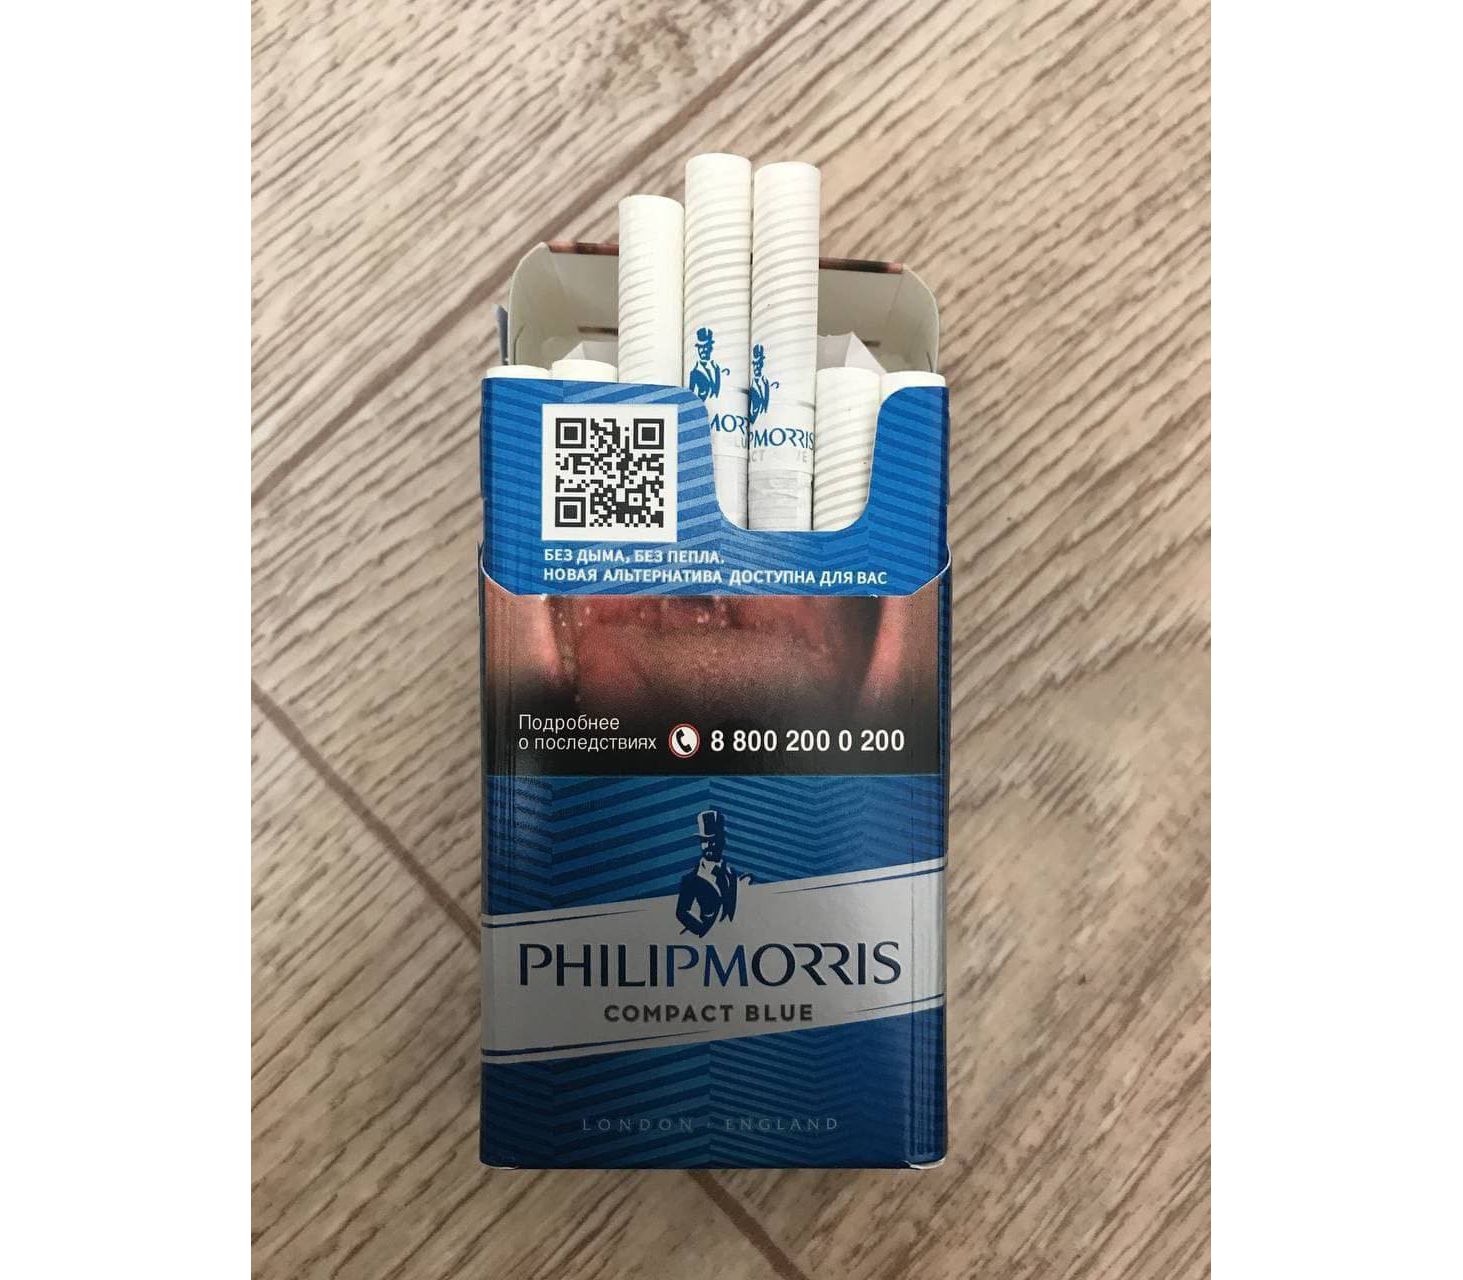 Моррис сигареты компакт. Сигареты Philip Morris Compact синий. Сигареты Филип Морис компакт. Филипс Морис сигареты компакт синие.